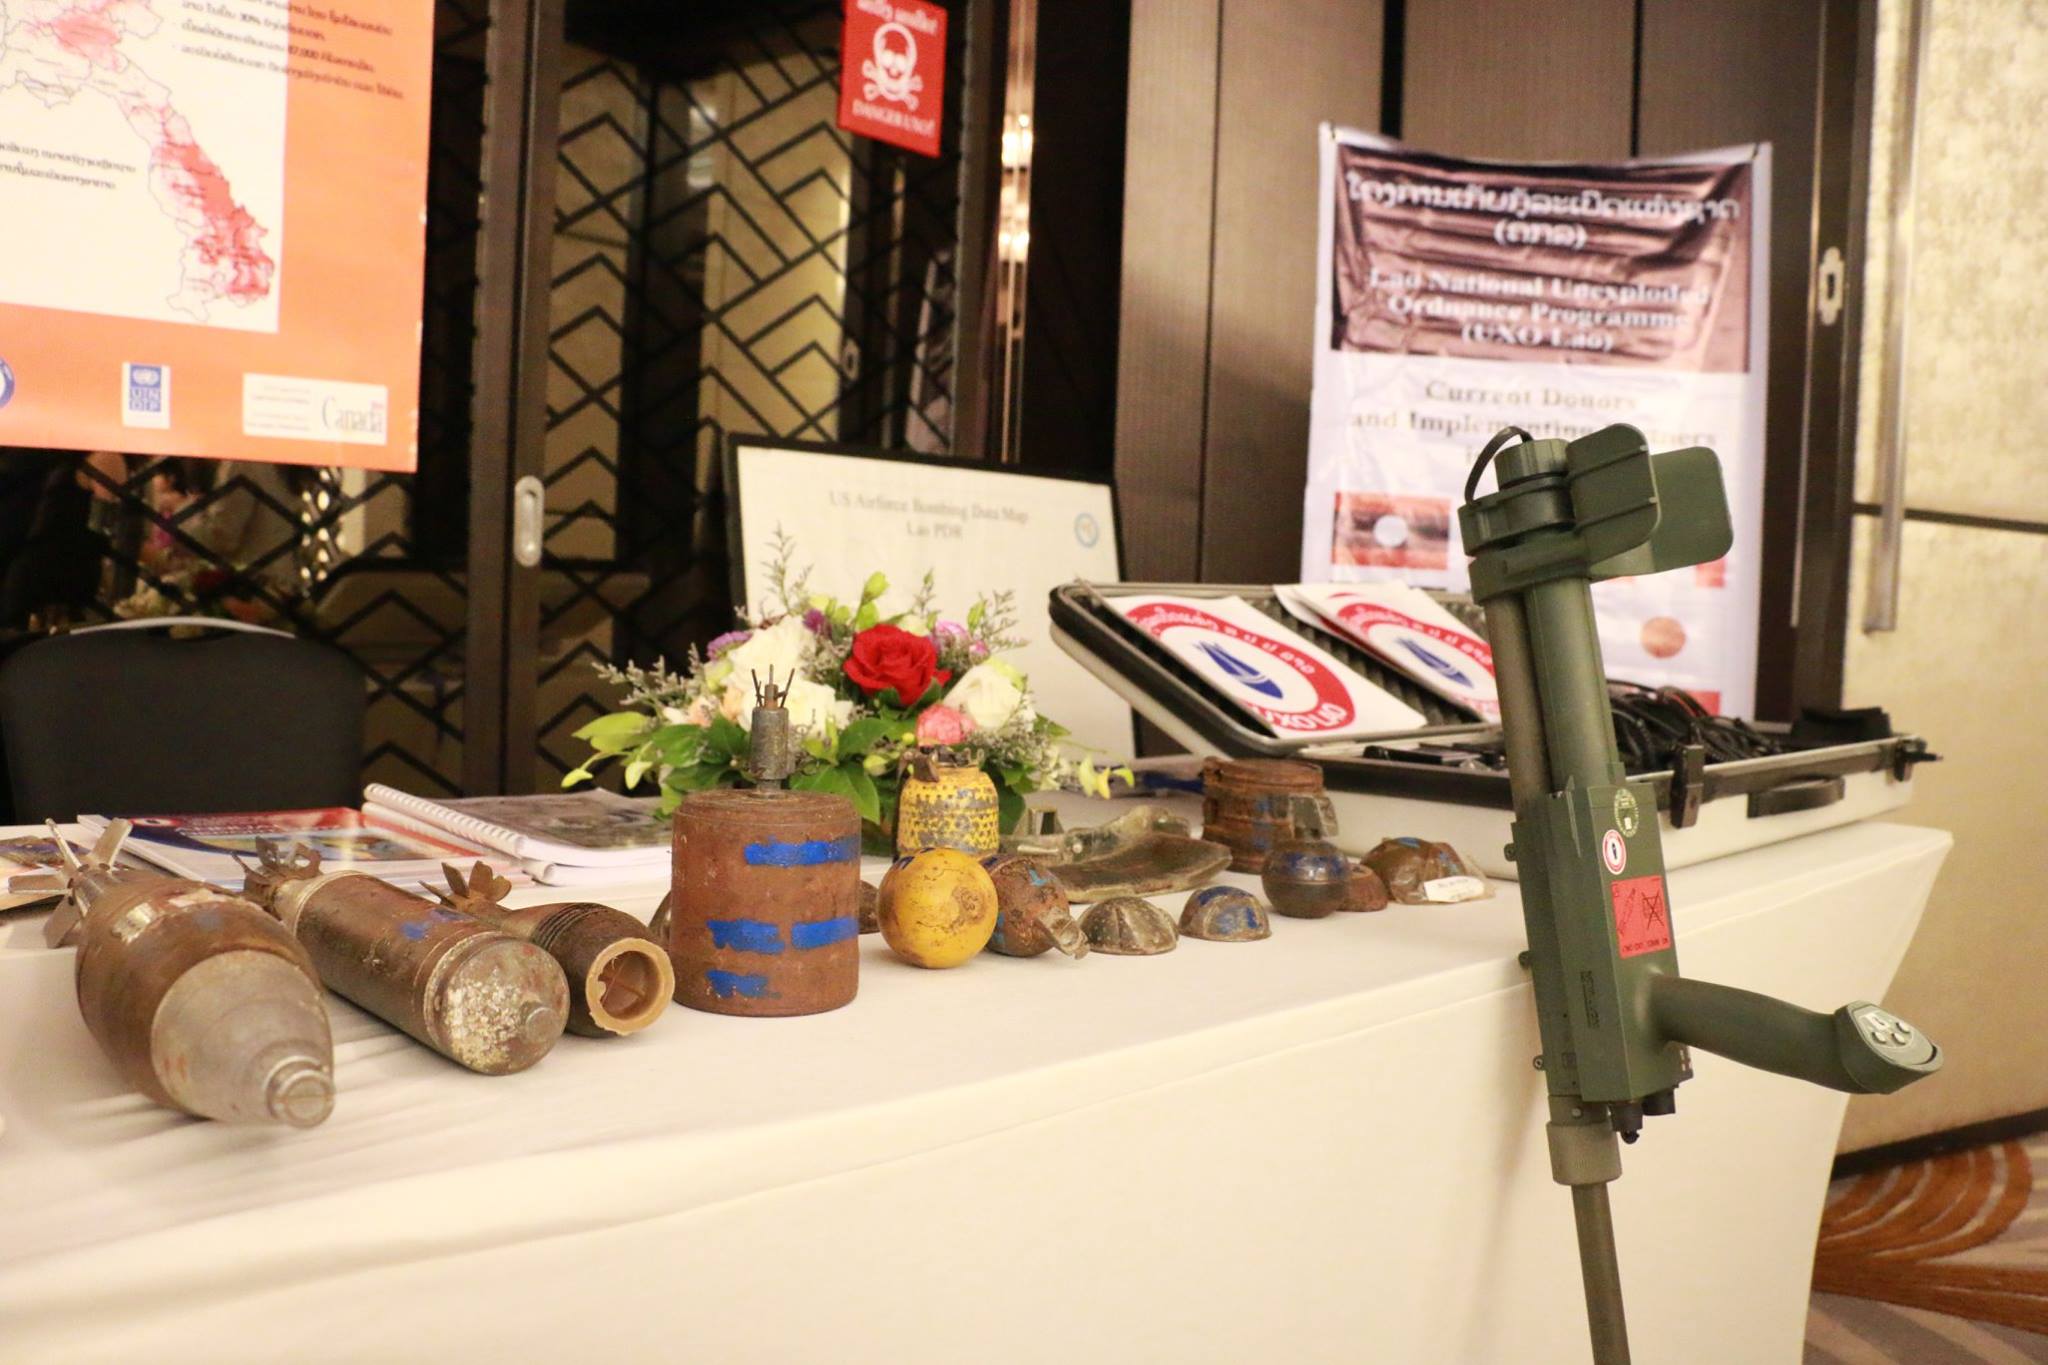 Norway's ambassador Laos attended landmines seminar